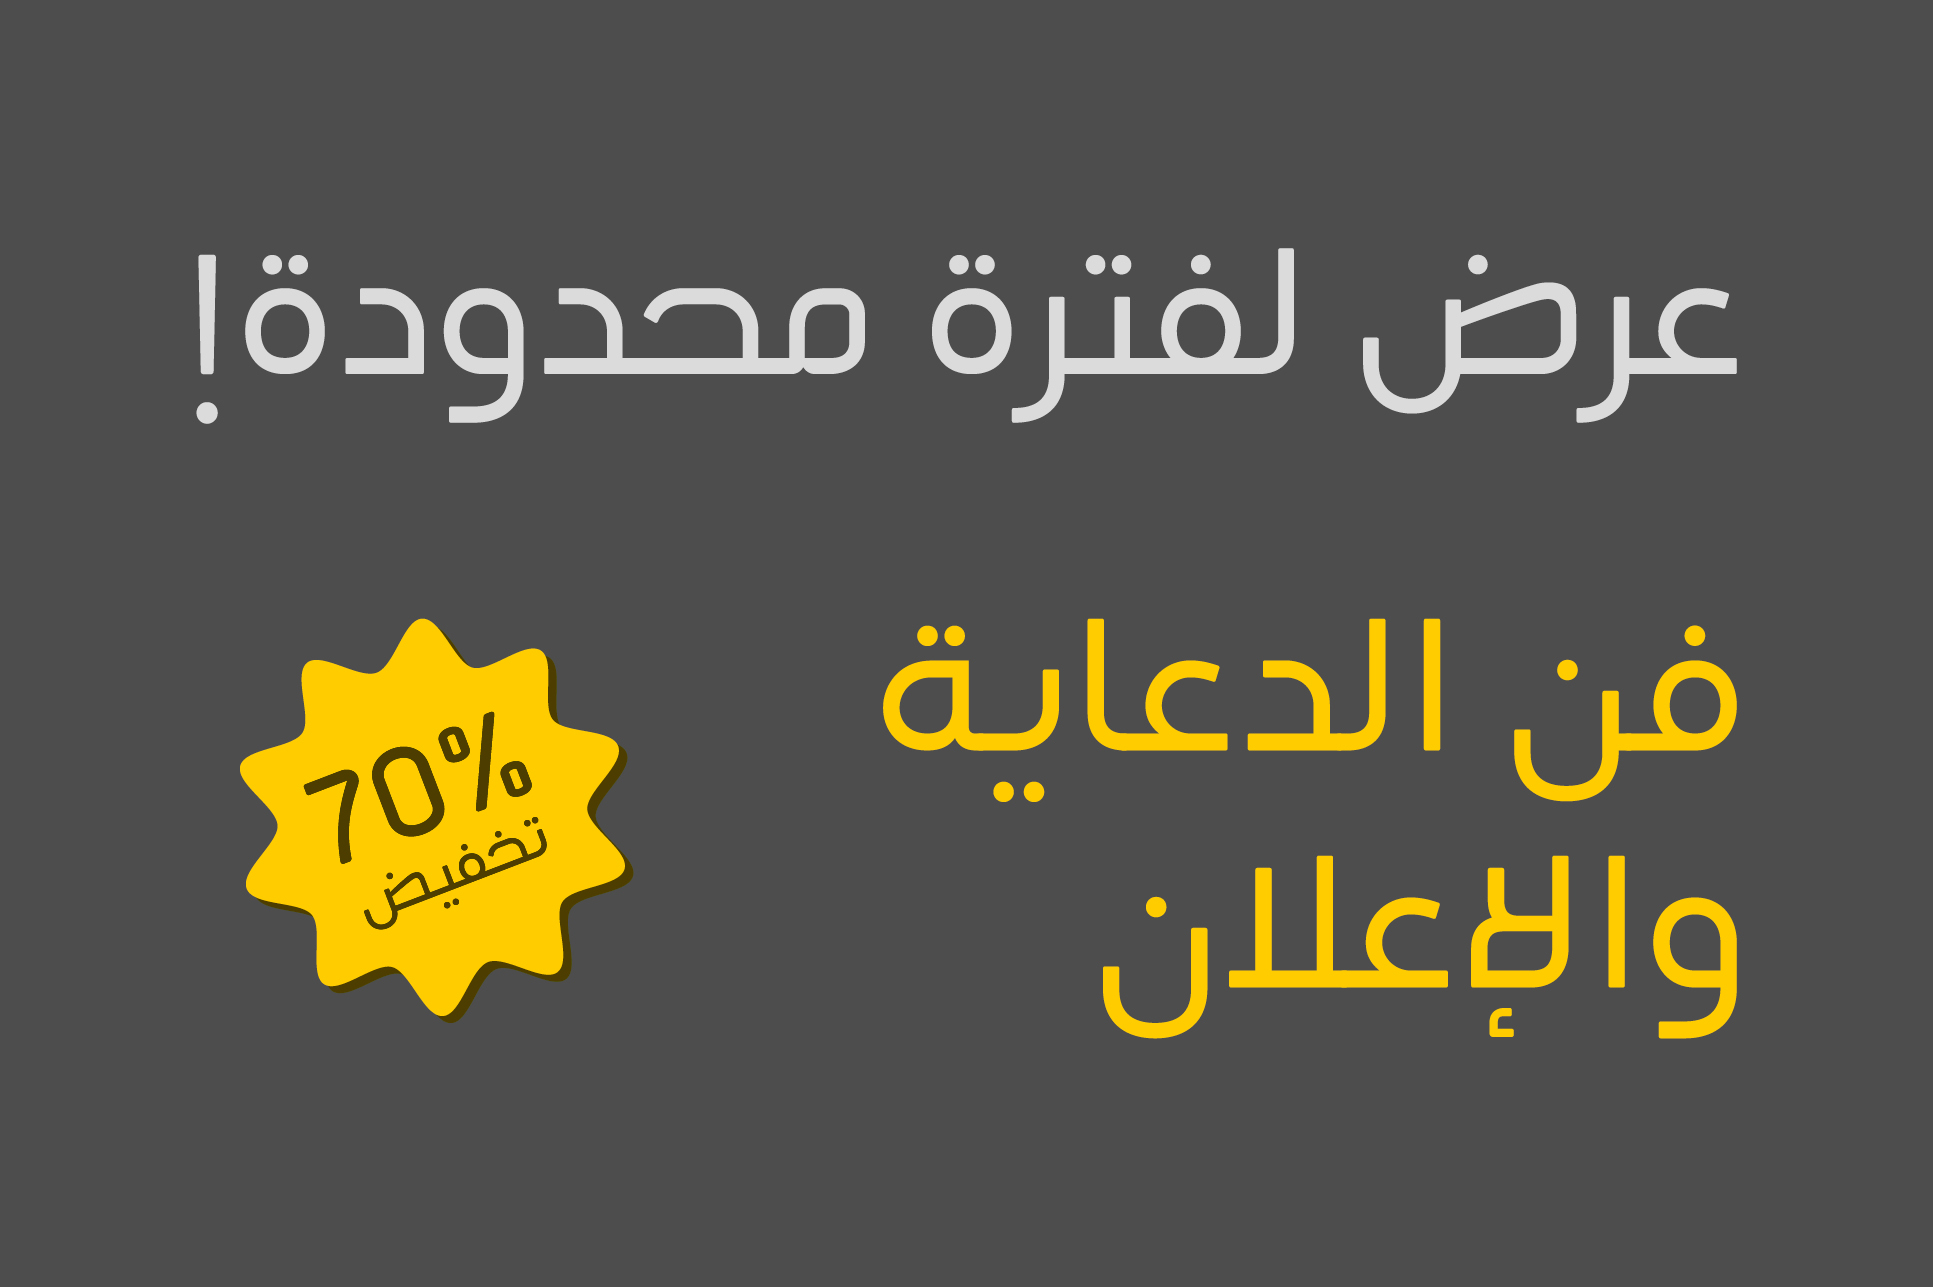 Tasreeh - effective Arabic Font.